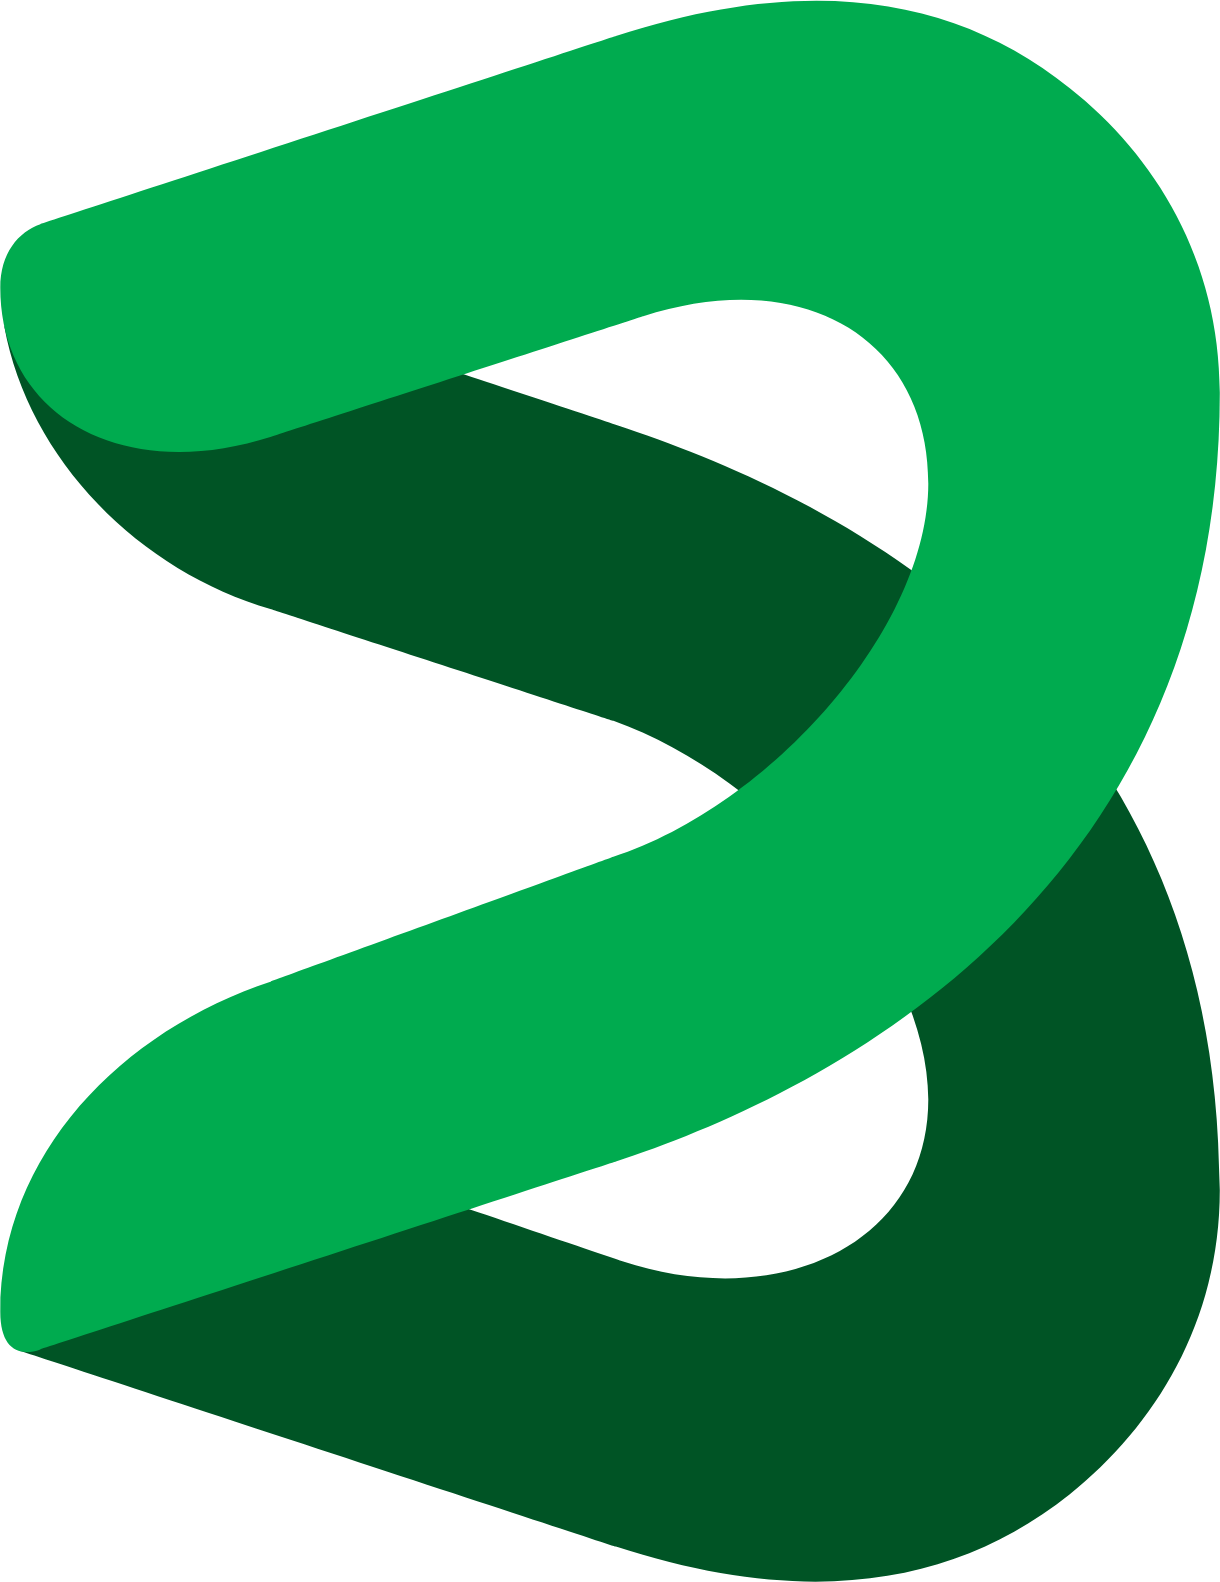 UmweltBank logo (transparent PNG)